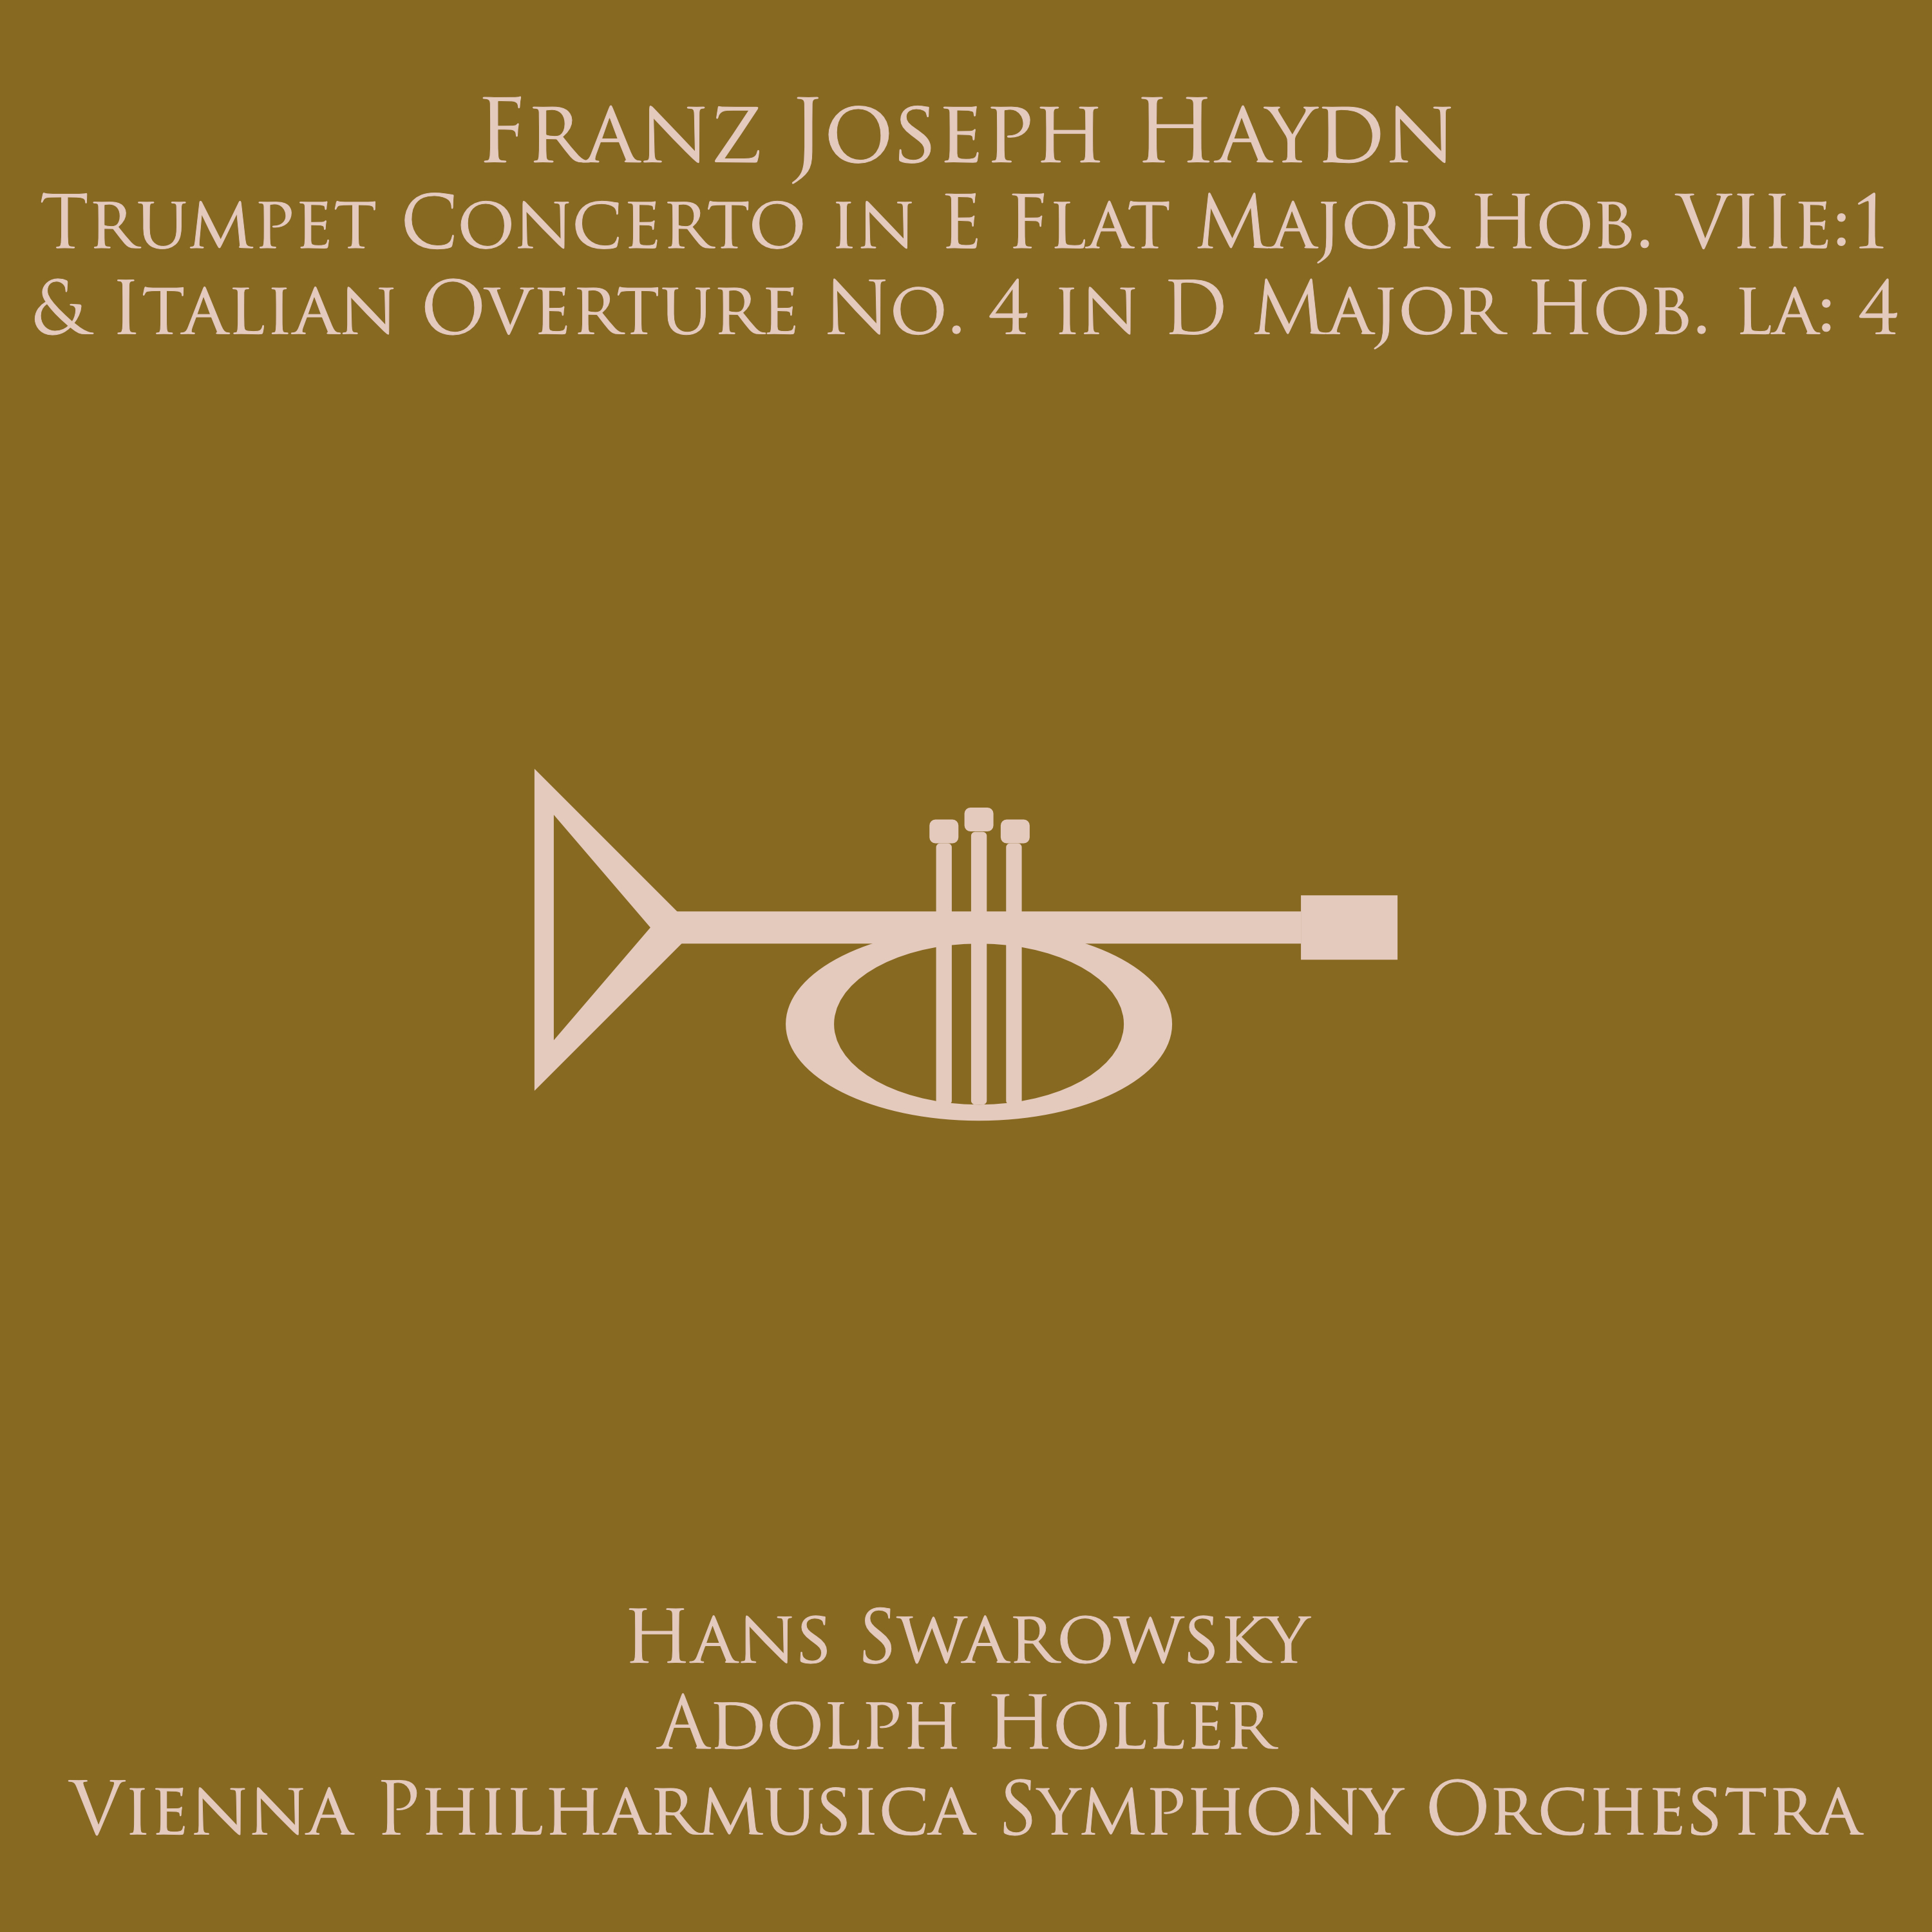 Trumpet Concerto in E Flat Major, Hob. VIIe:1: II. Andante